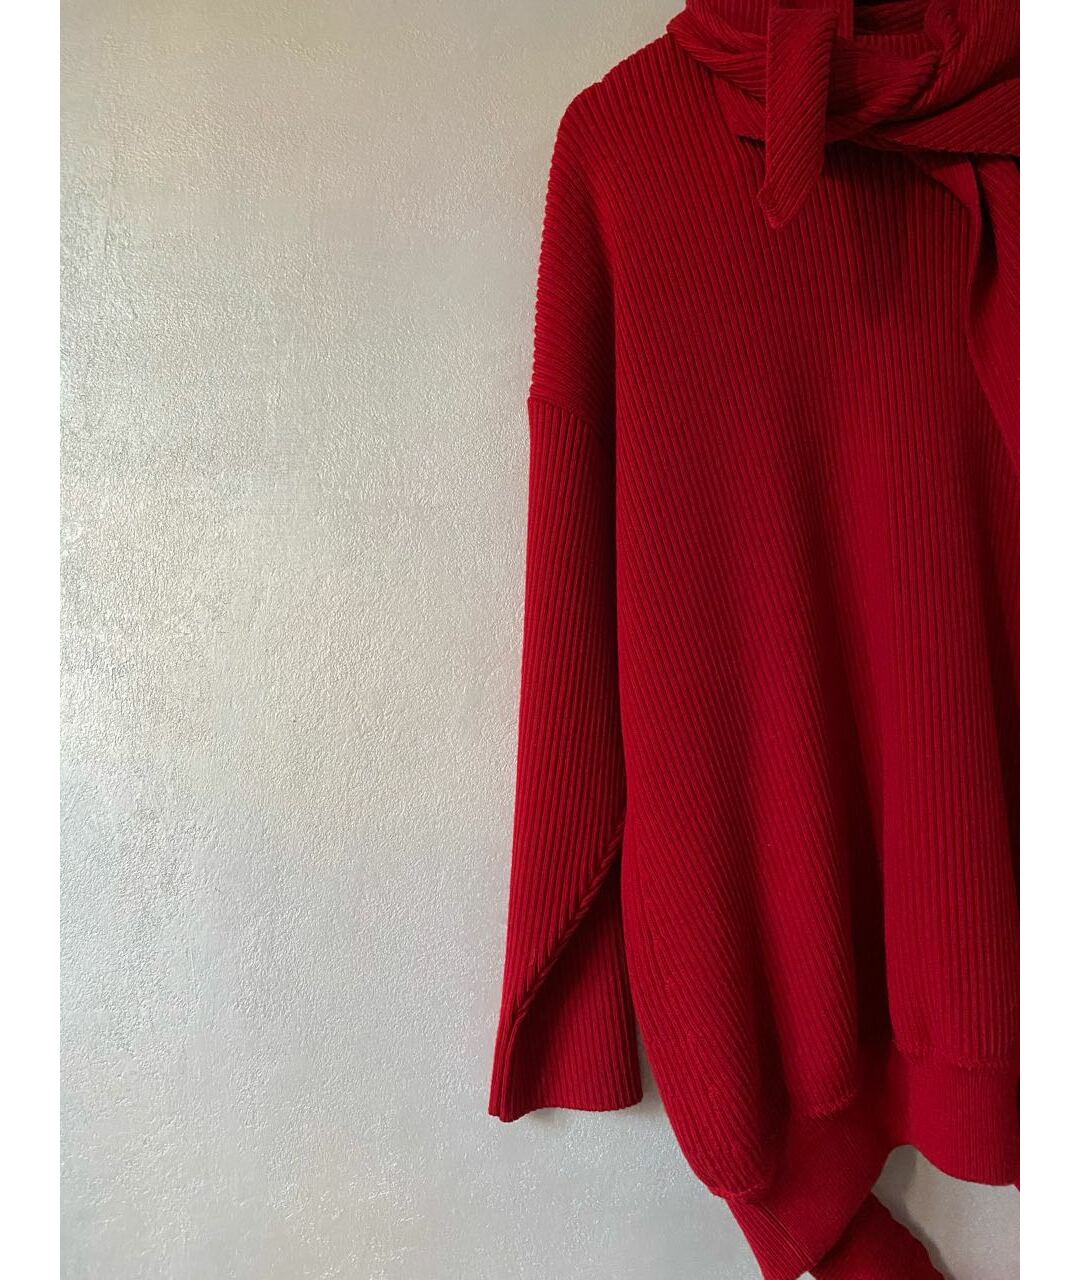 BALENCIAGA Красный шерстяной джемпер / свитер, фото 3